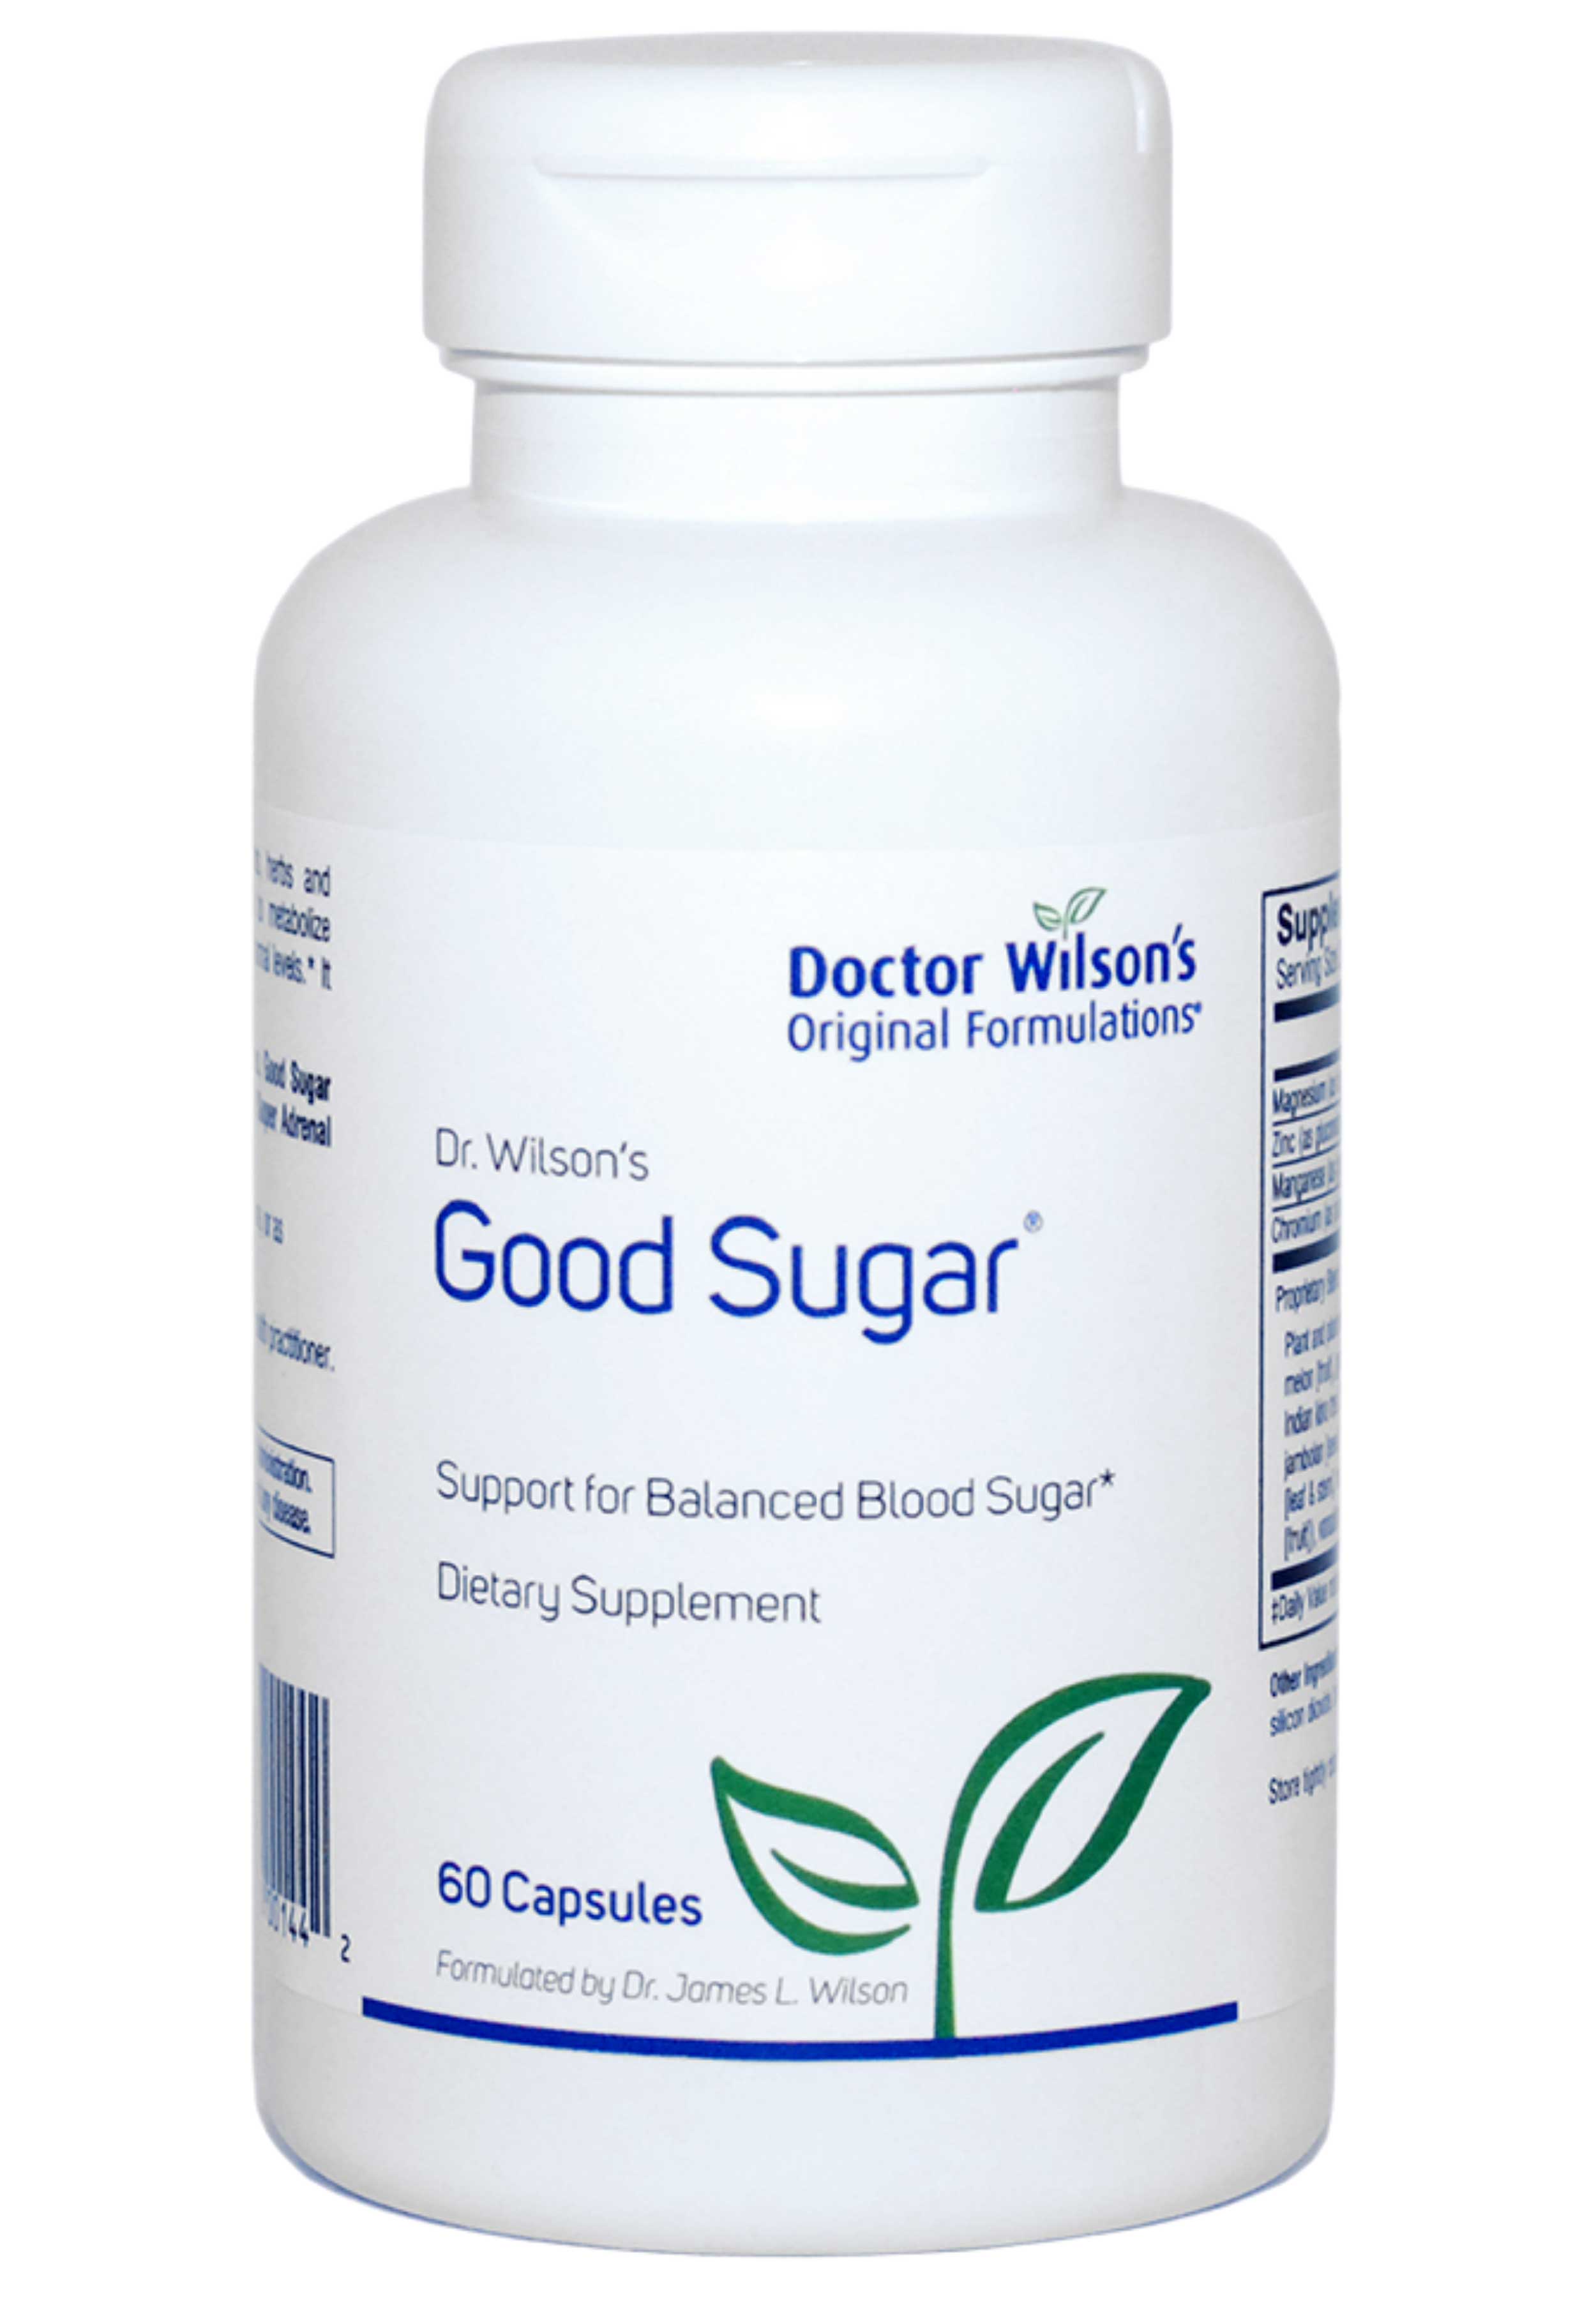 Doctor Wilson's Original Formulations Good Sugar